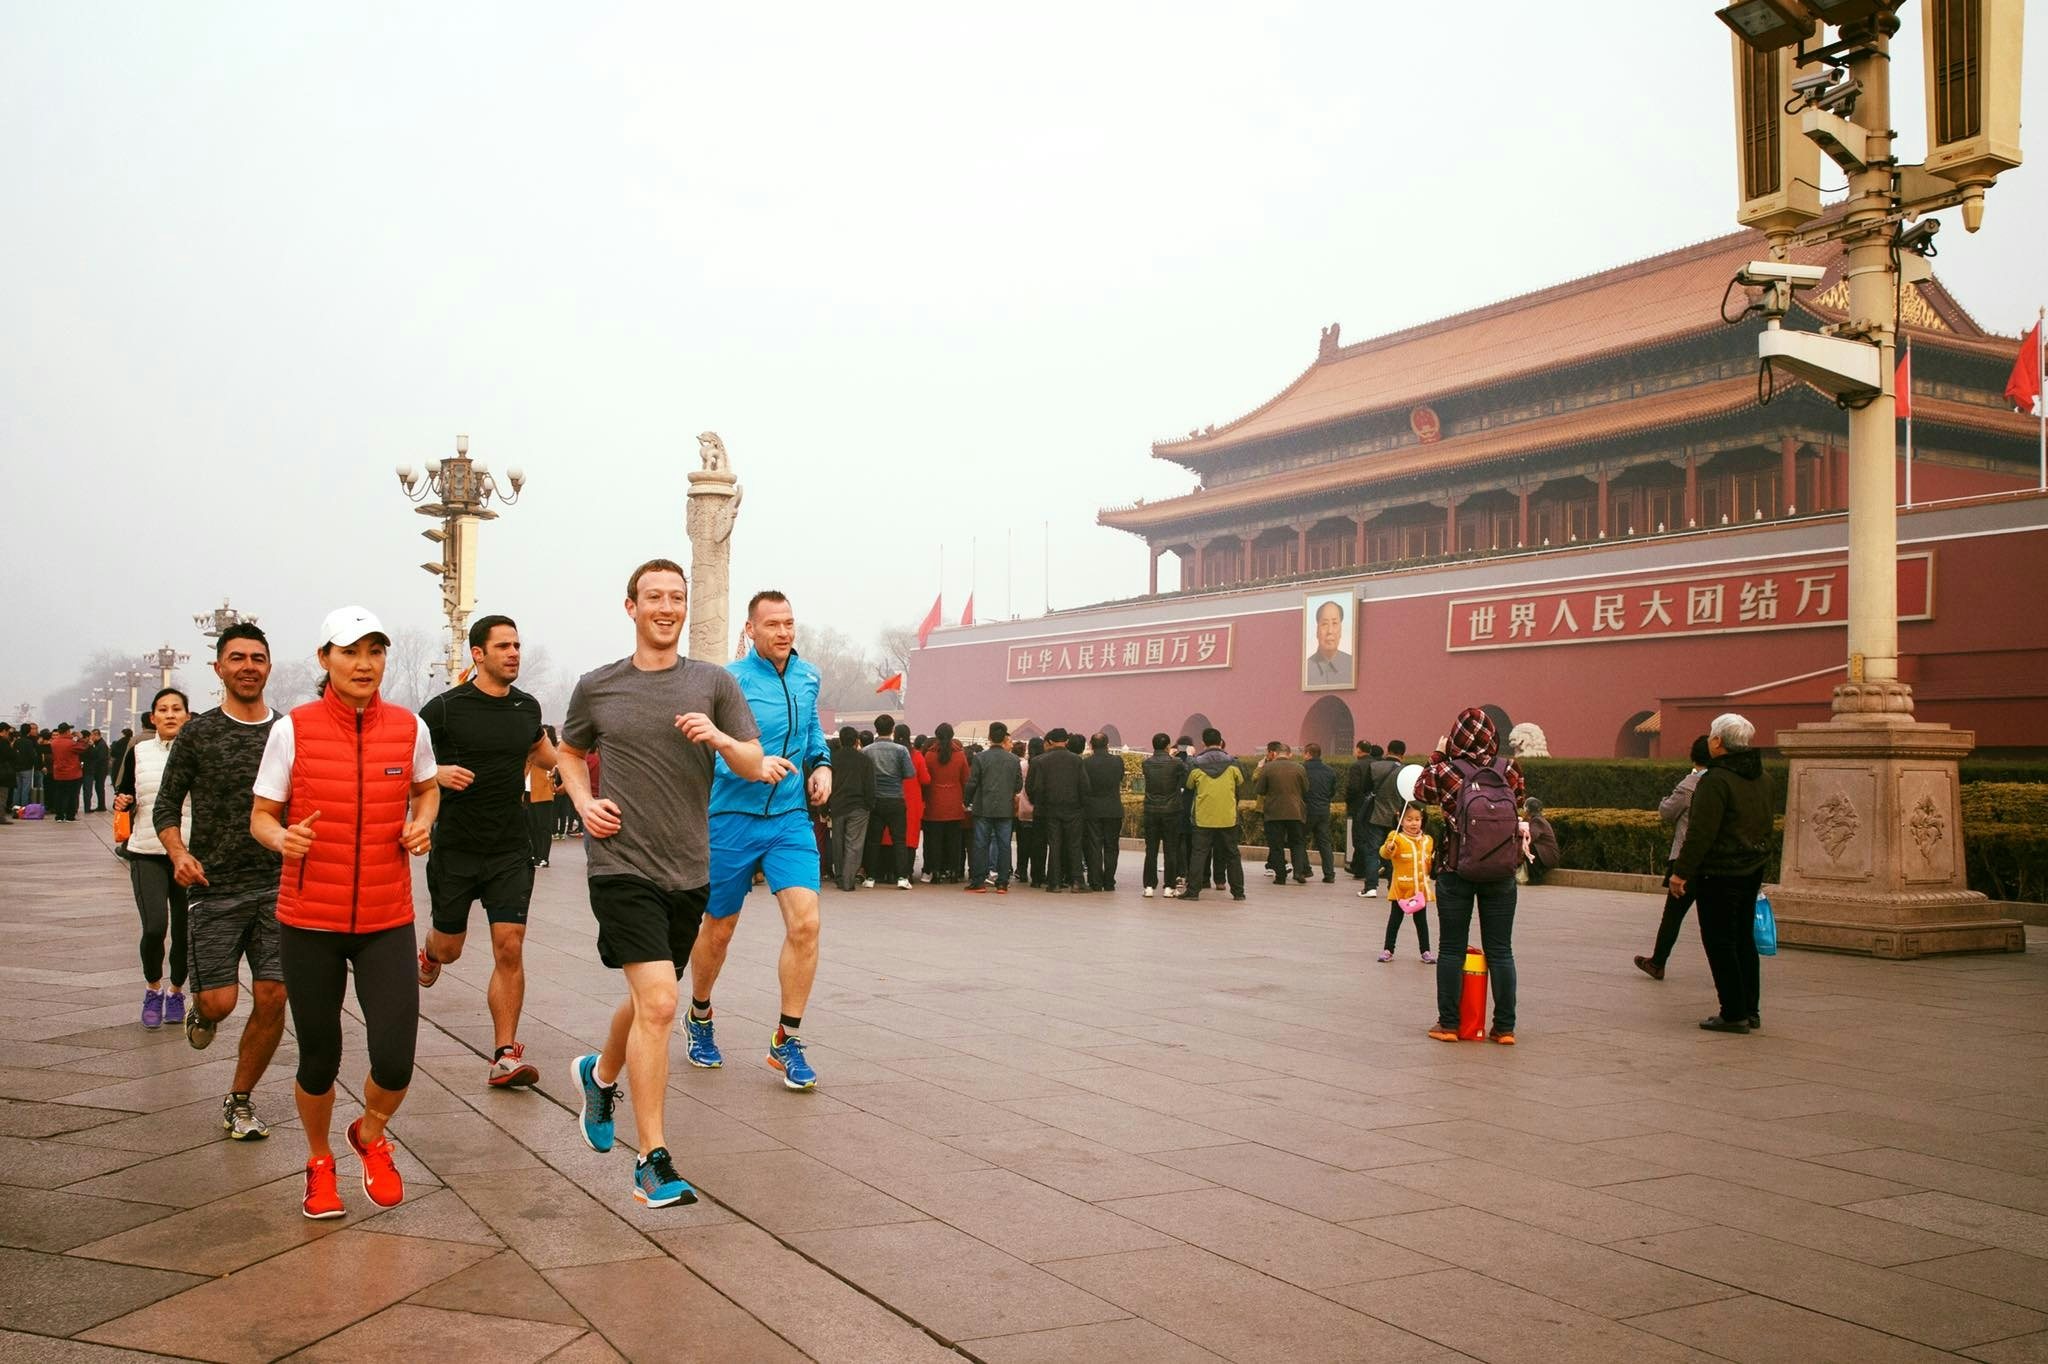 Mark Zuckerberg ran through Beijing on a smoggy day as part of his charm offensive in China. (Facebook/Mark Zuckerberg)